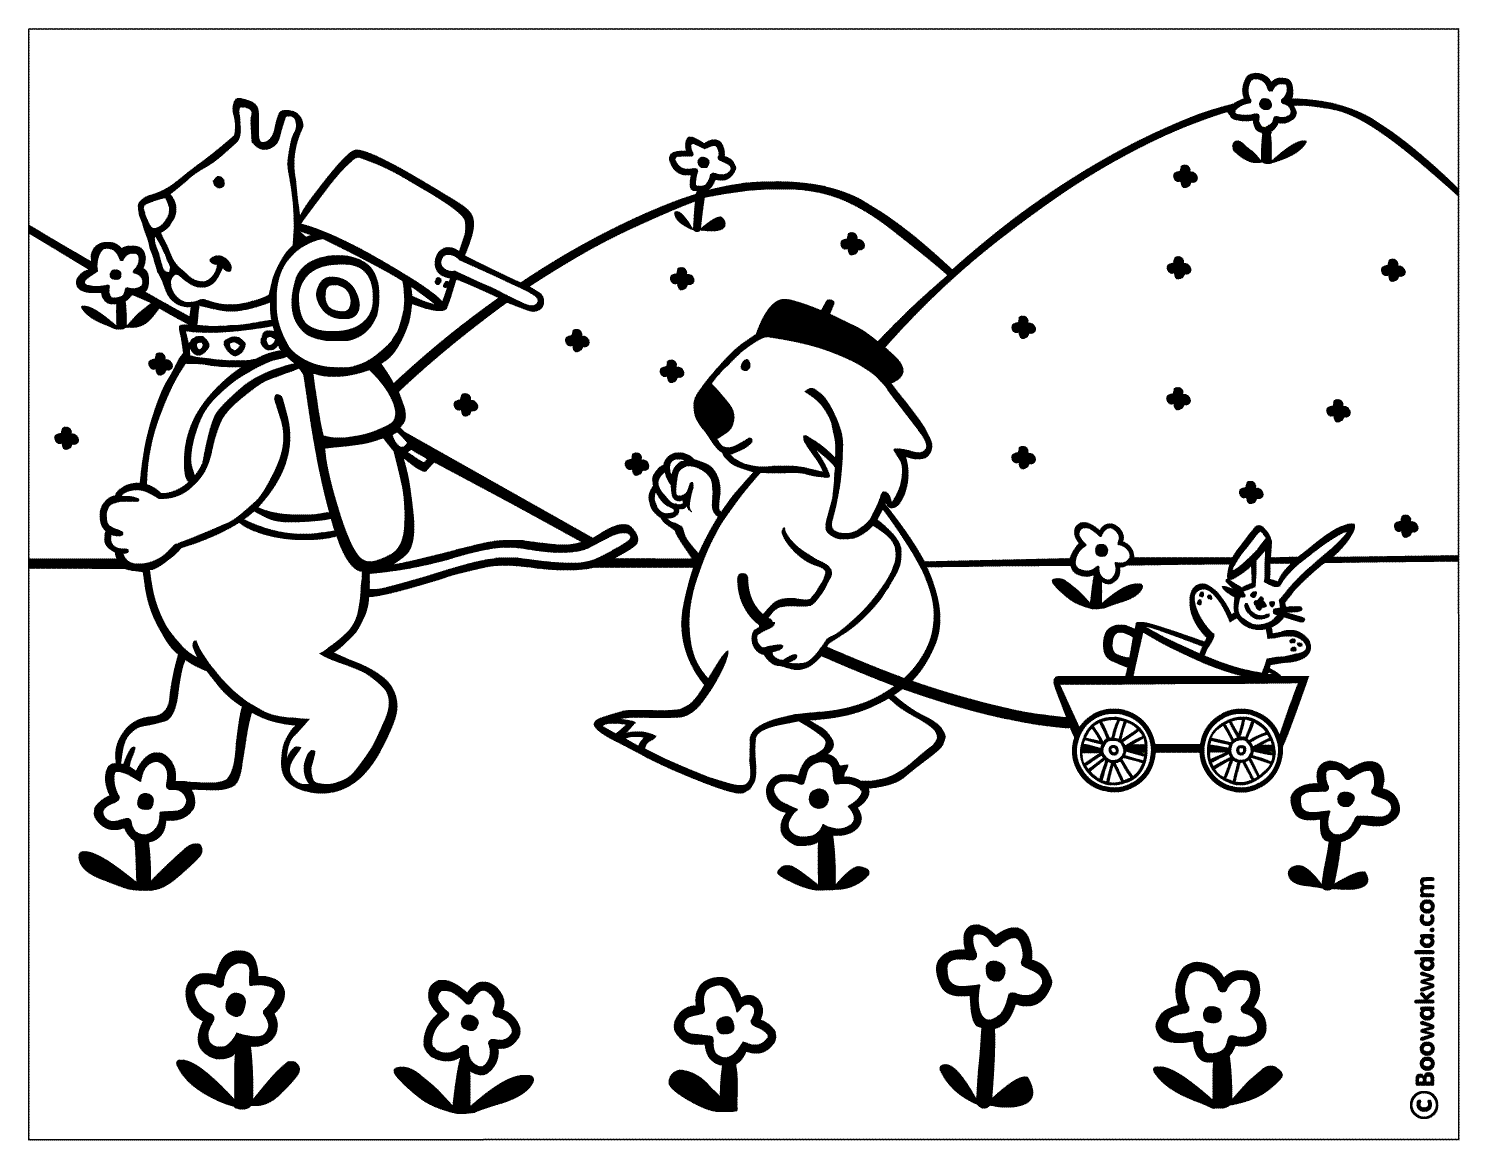 games hiking dessin à colorier boowa et kwala email hiking dessin à colorier